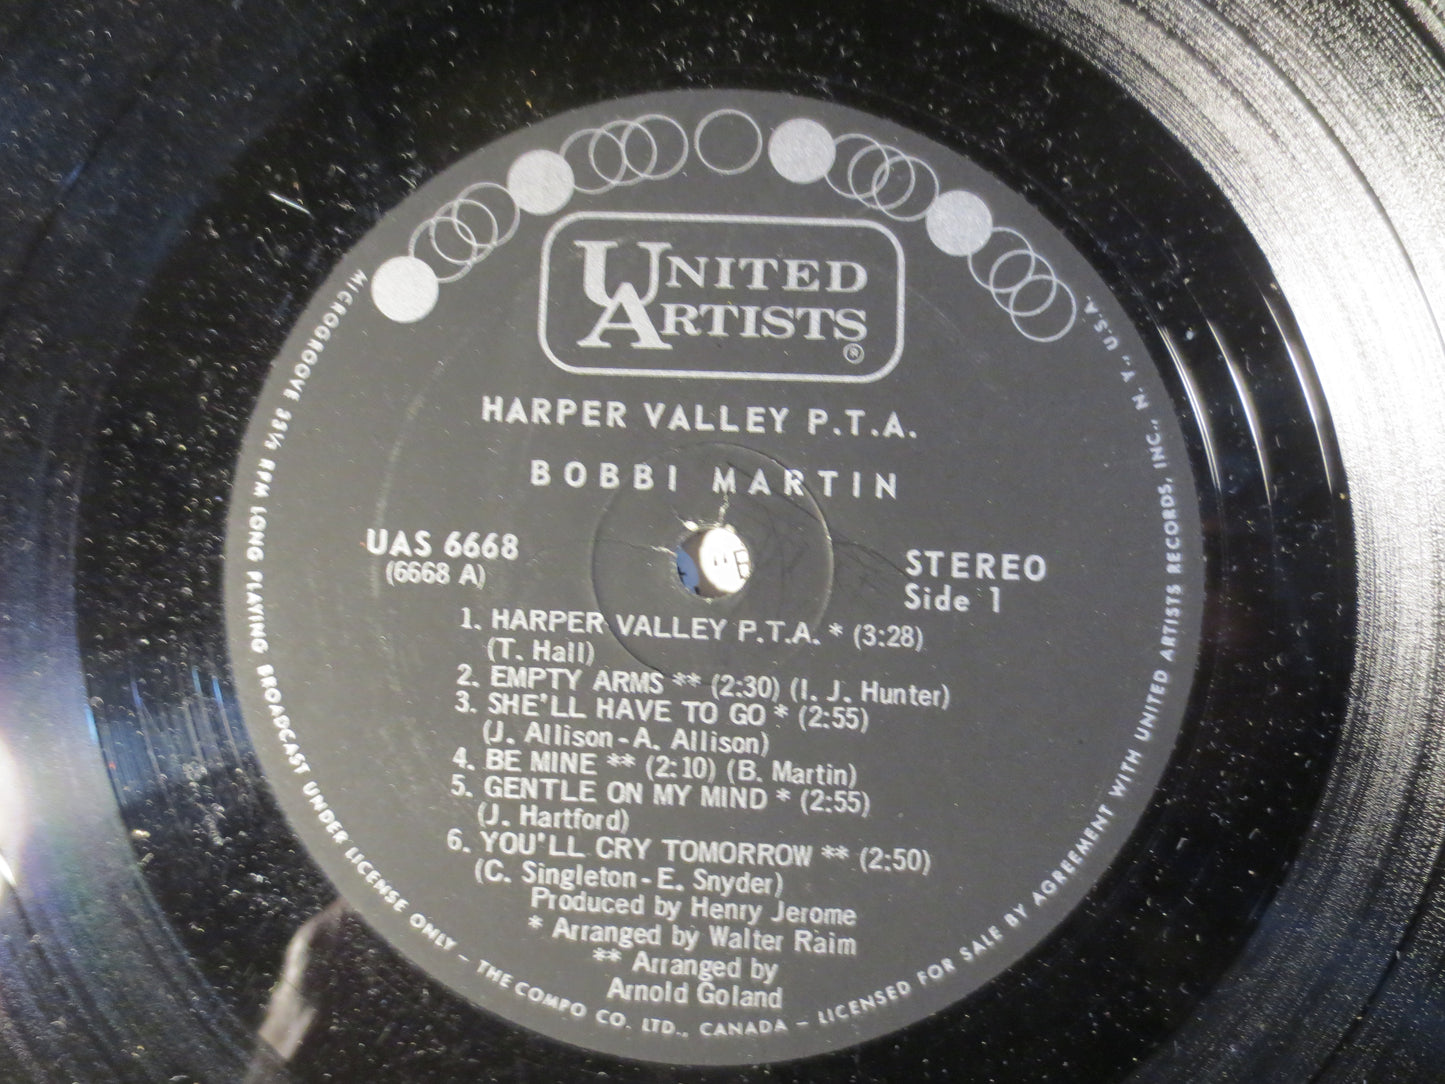 BOBBI MARTIN, Harper Valley PTA, Bobbi Martin Record, Country Record, Bobbi Martin Album, Bobbi Martin Lps, 1968 Records